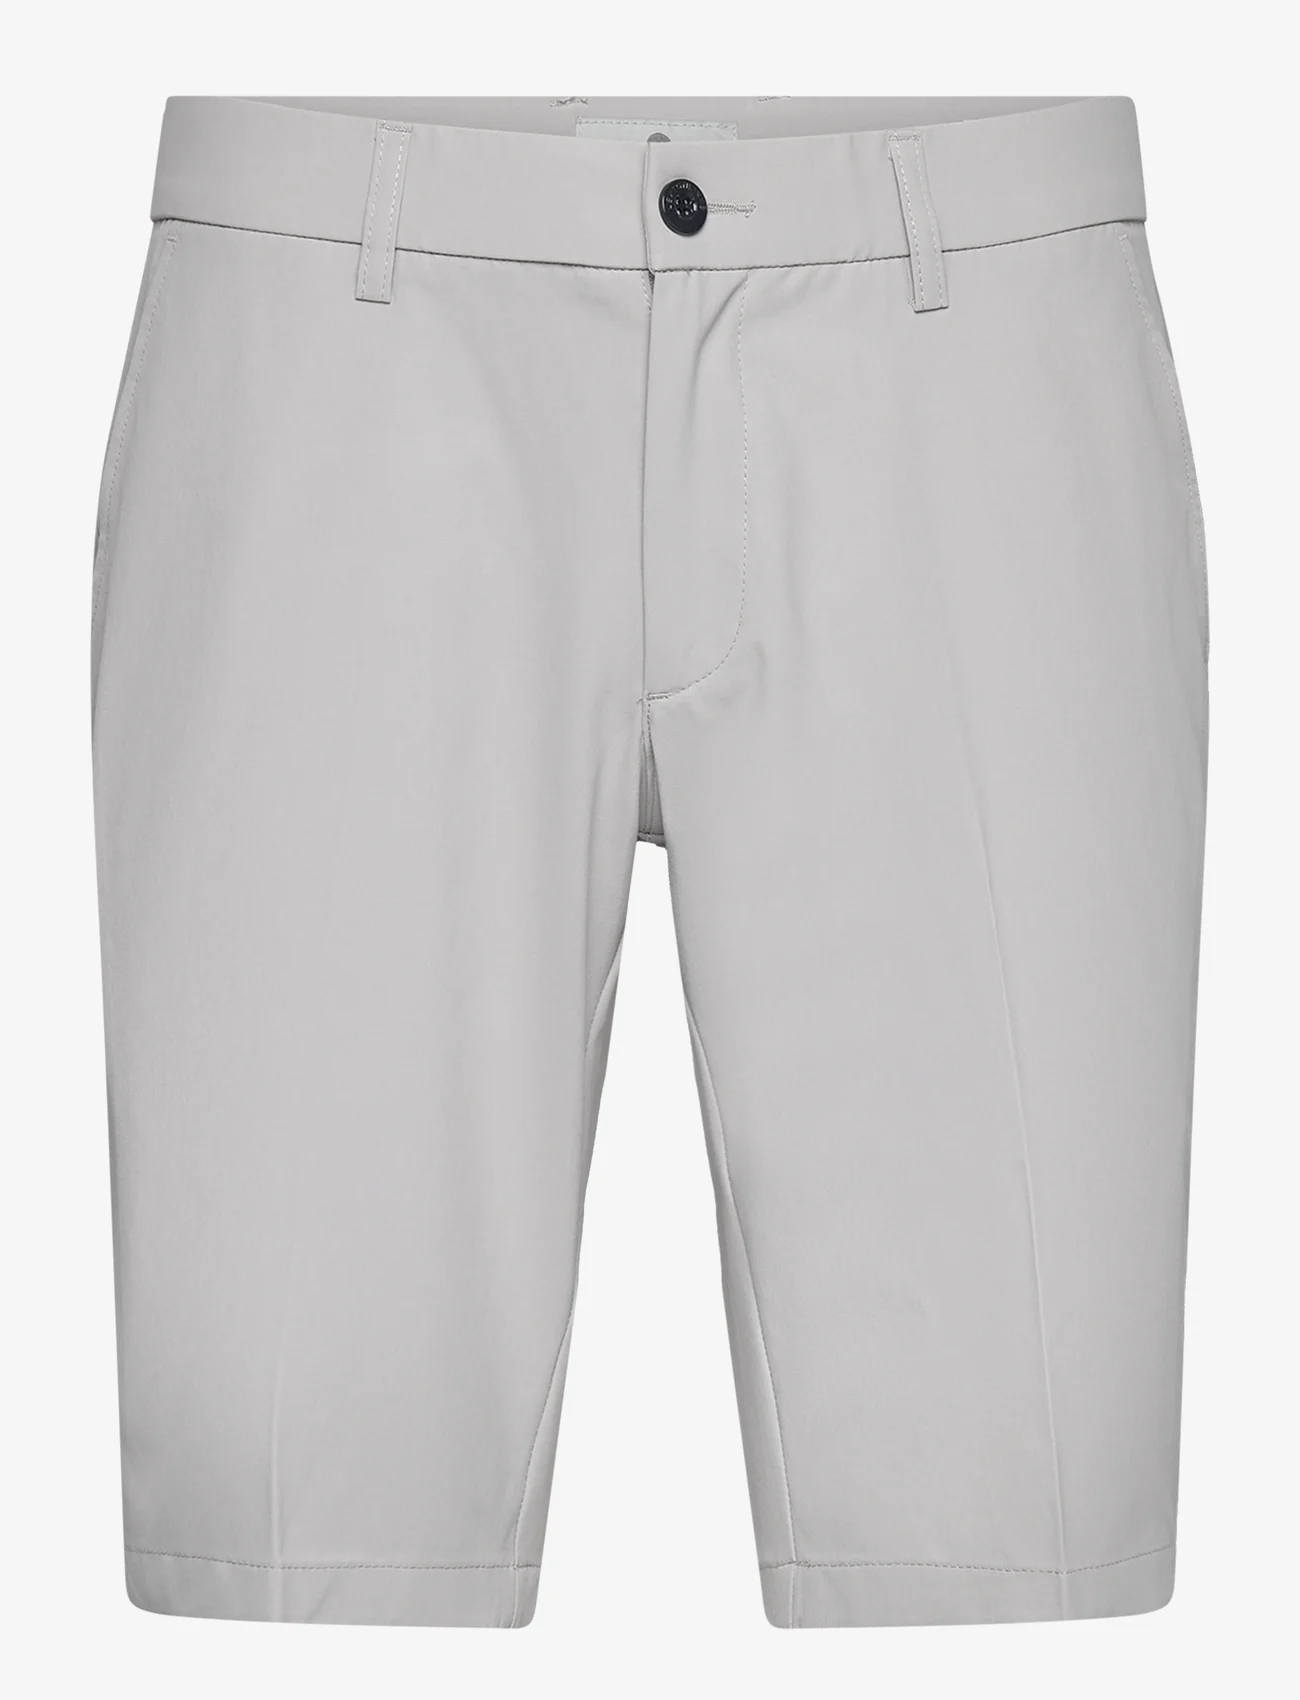 Lexton Links - Pancras Golf Shorts - golfshorts - light grey - 0